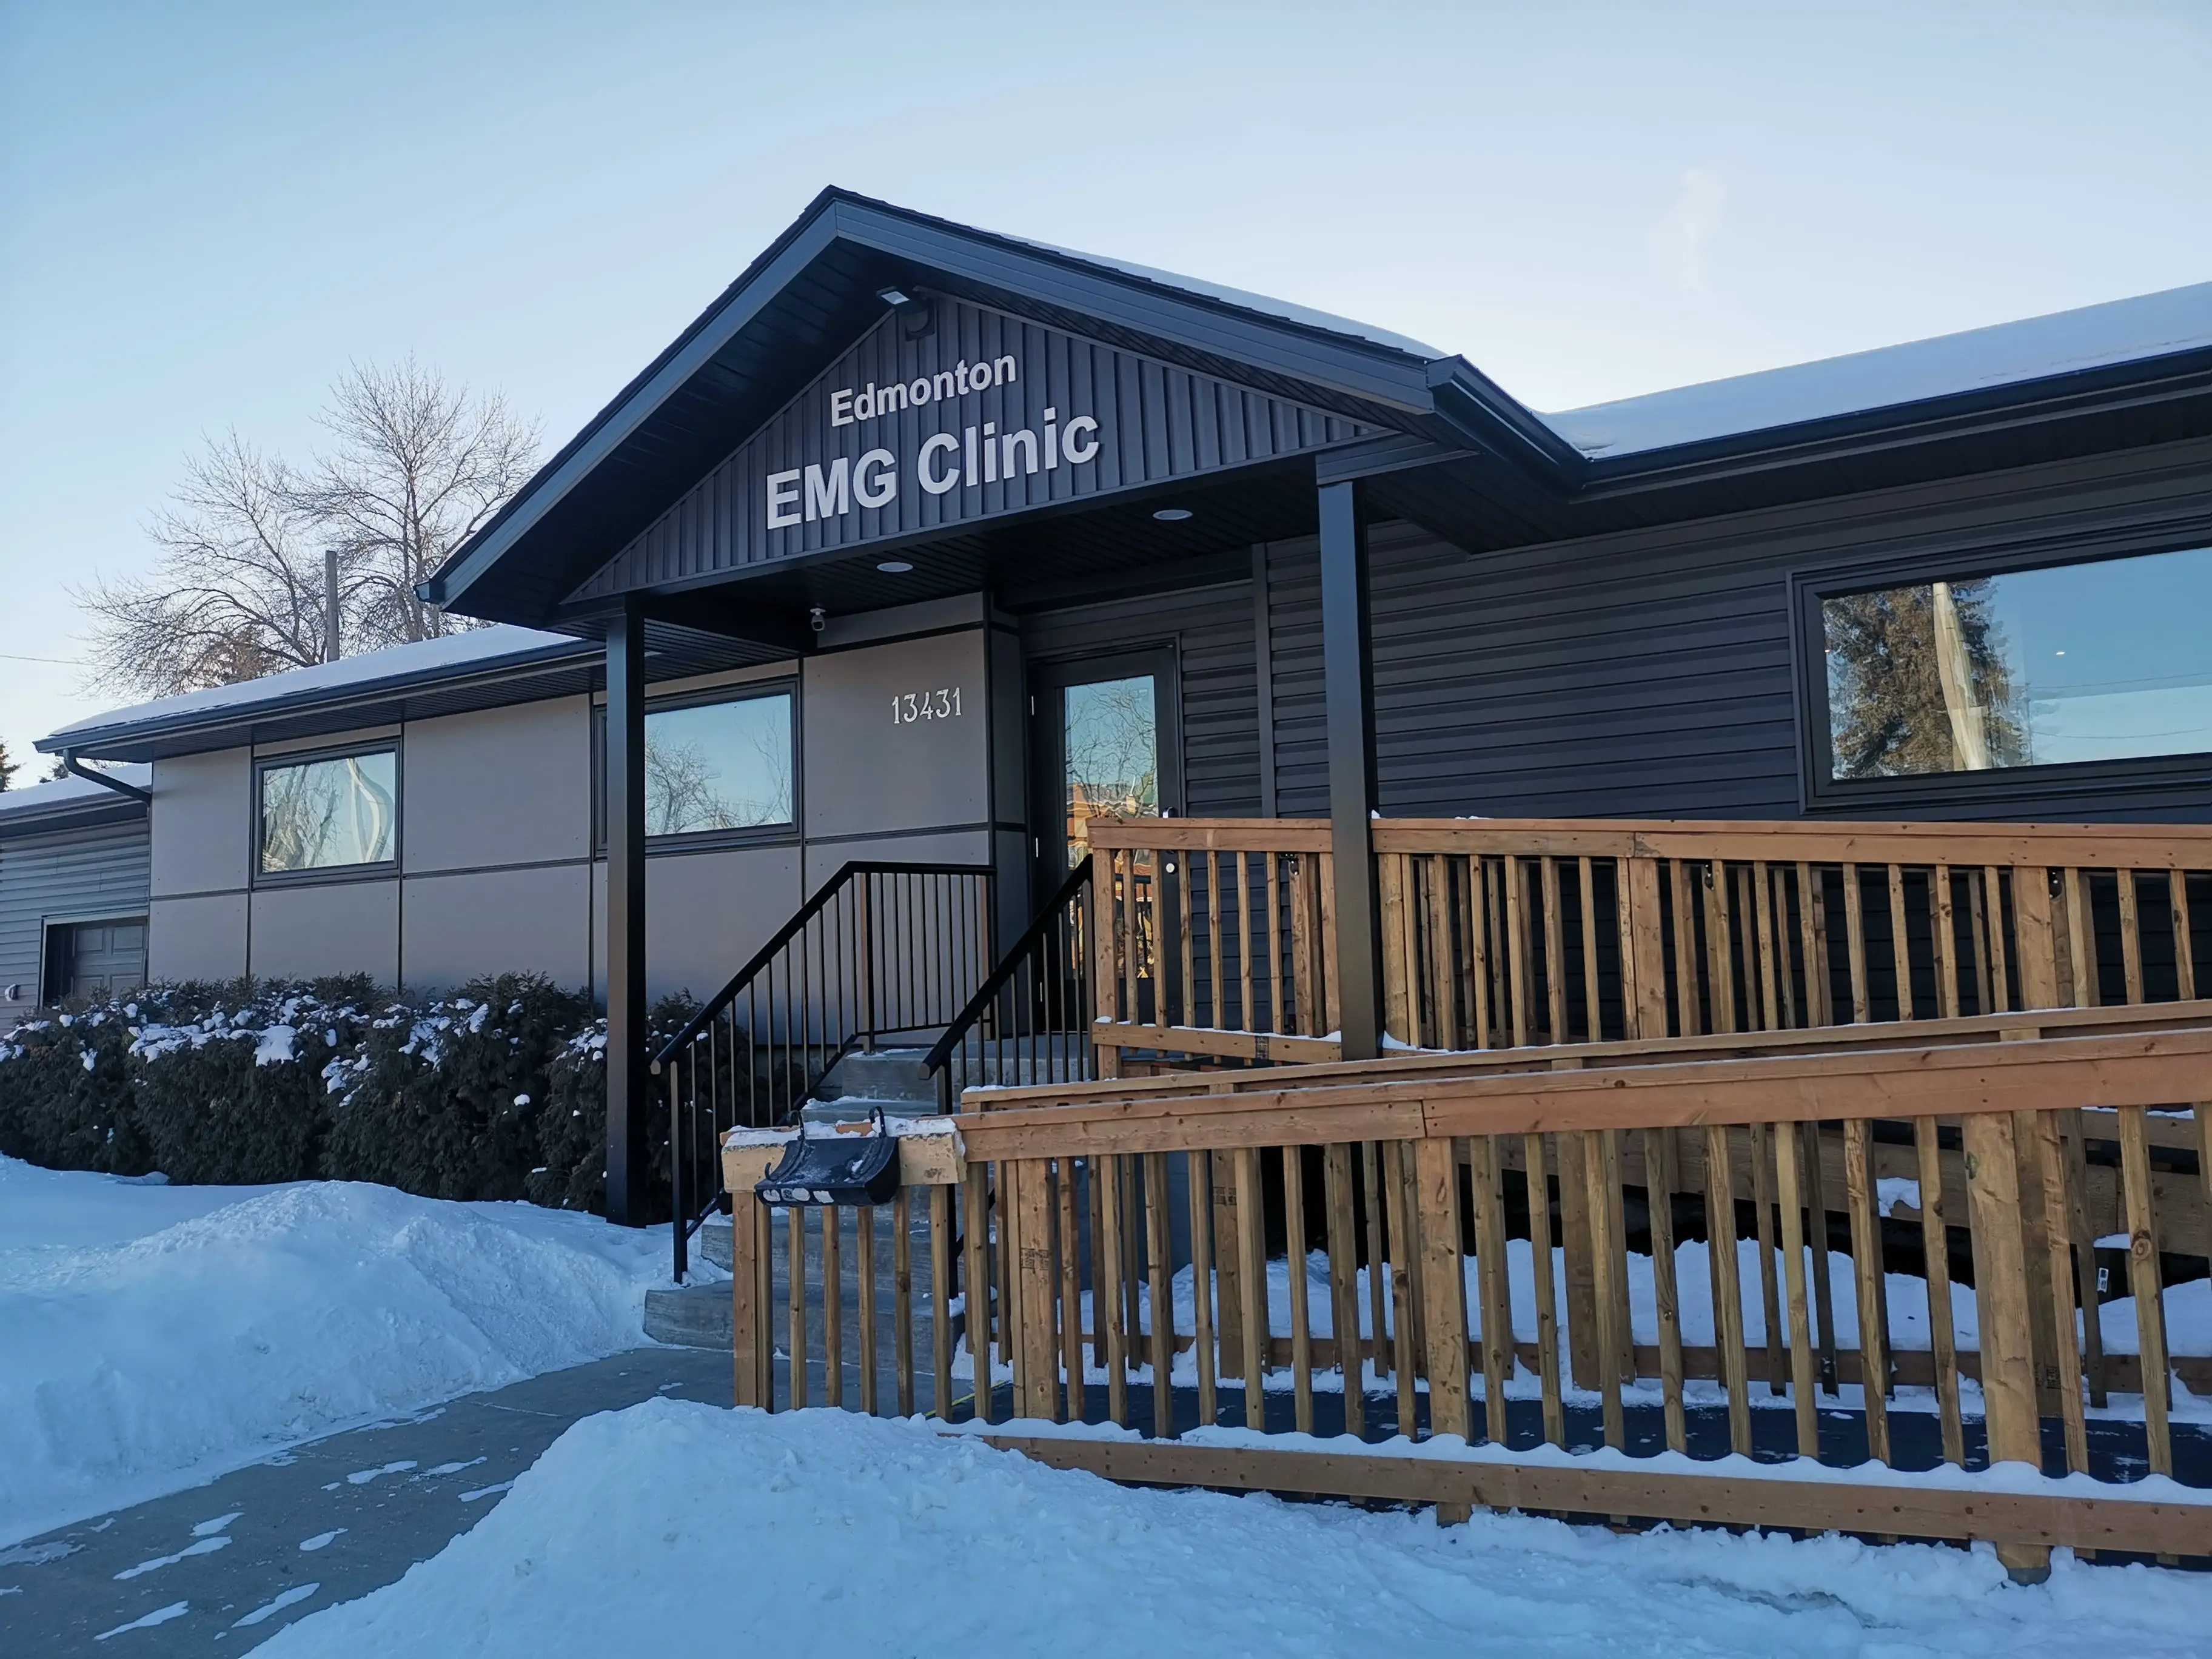 Edmonton EMG Clinic